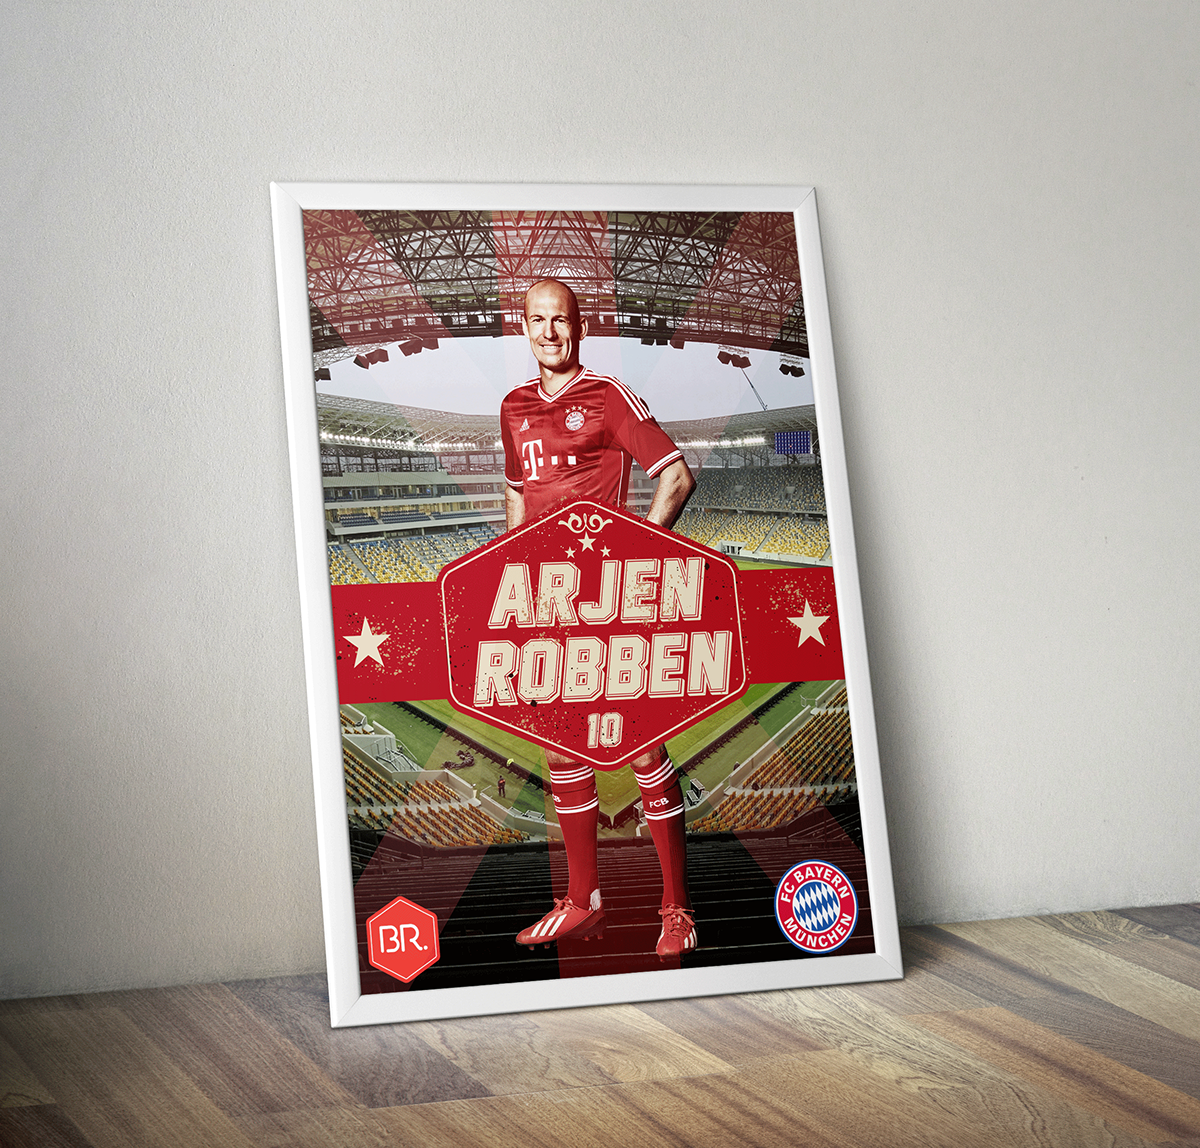 robben Arjen Robben design bayern munich Bayern football soccer Arena poster print retouch